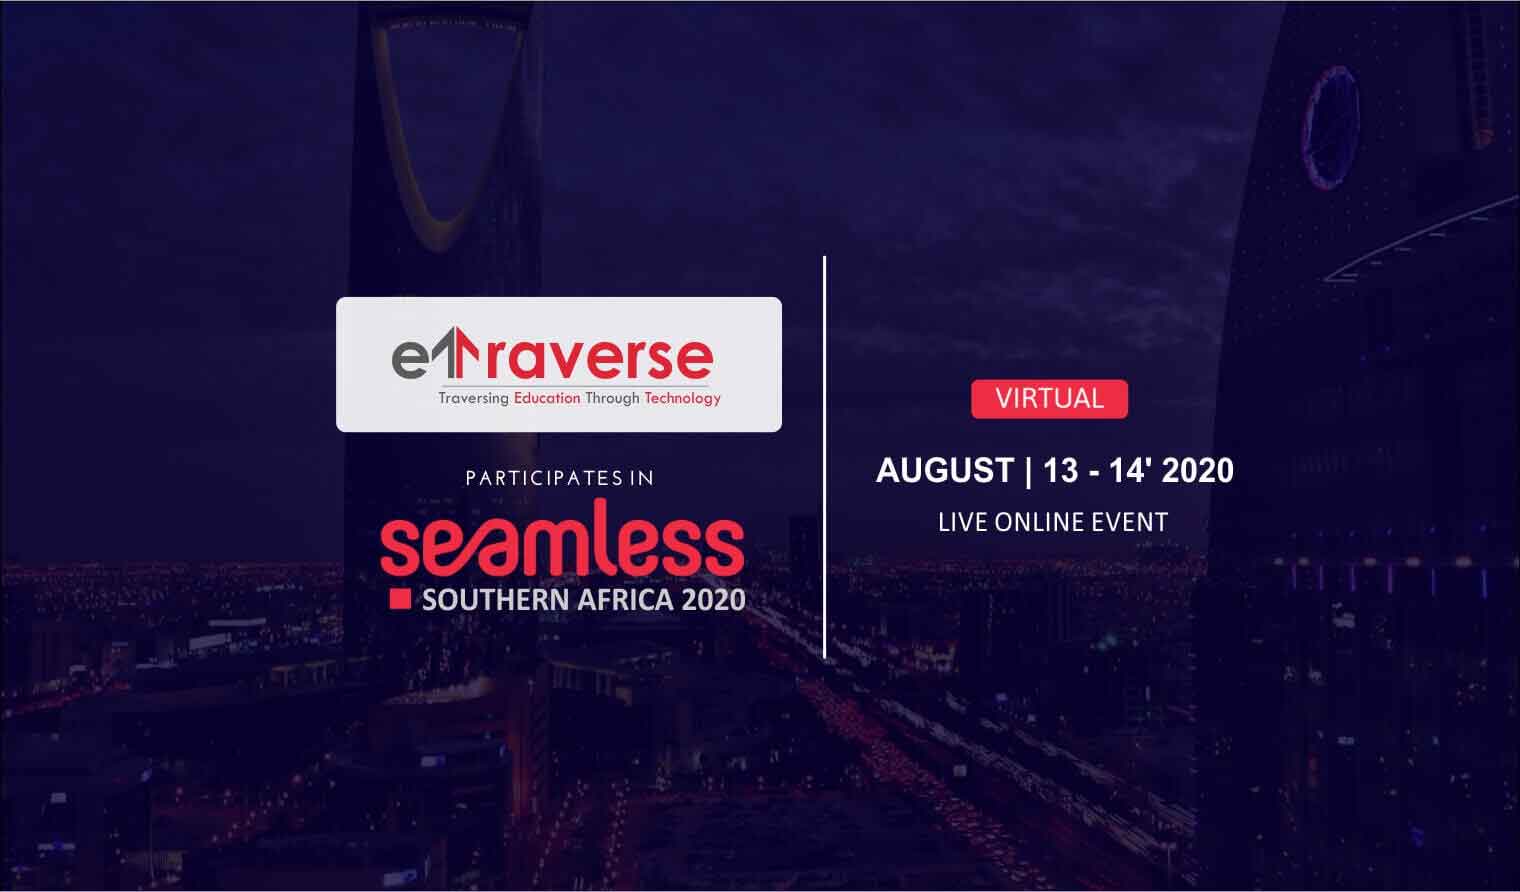 eTraverse seamless southernafrica2020